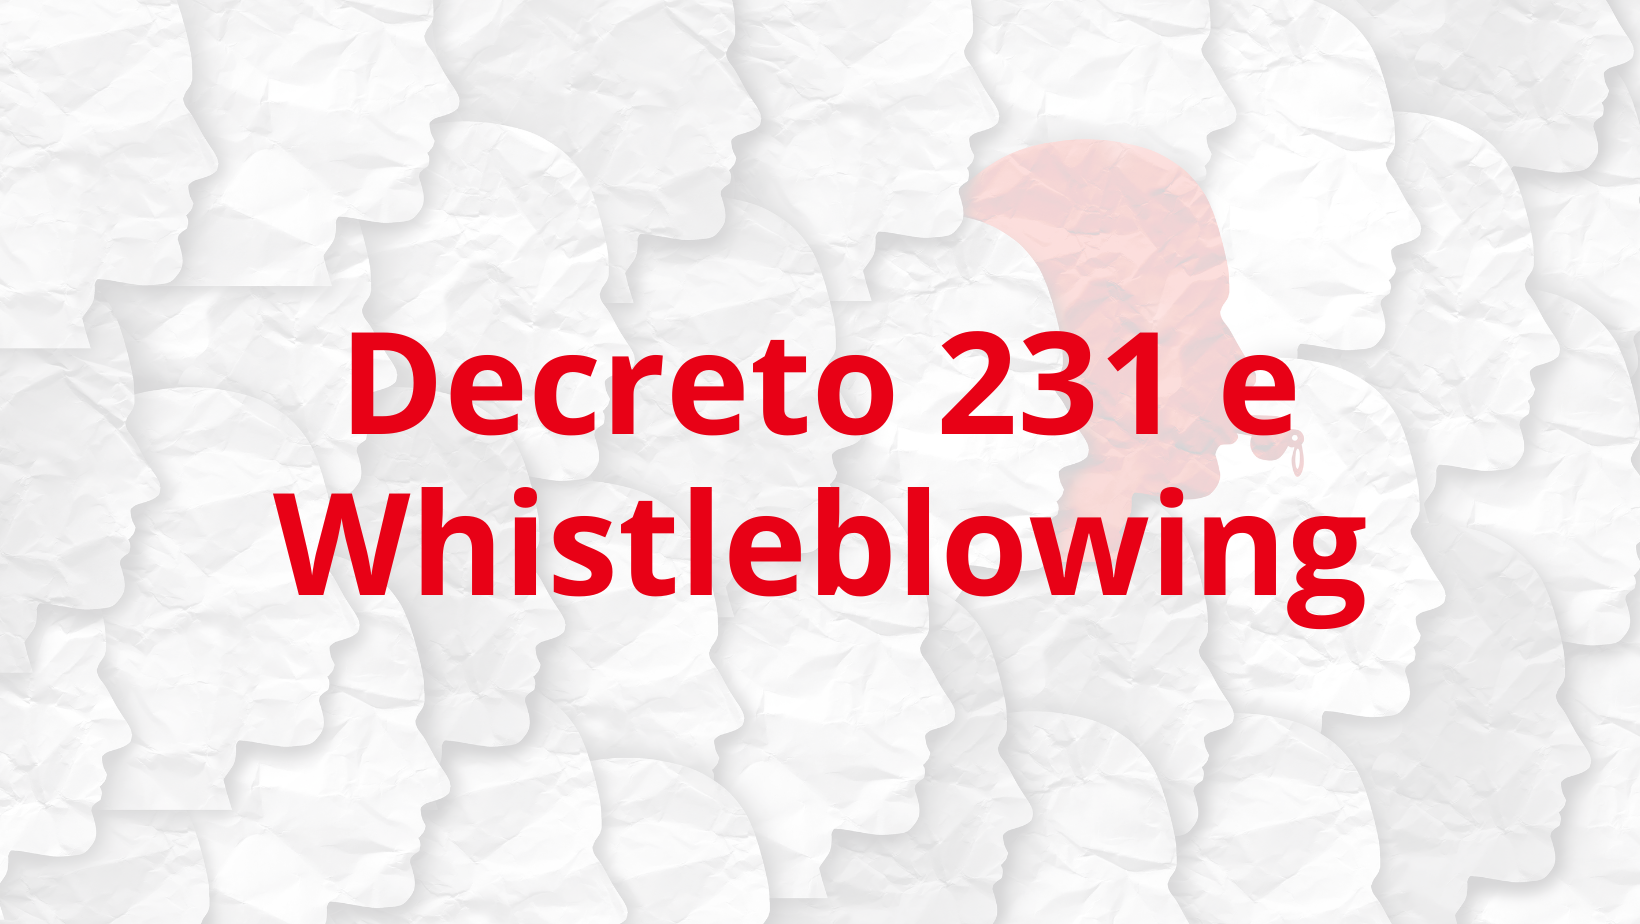 Corso Decreto 231 e Whistleblowing Audit People